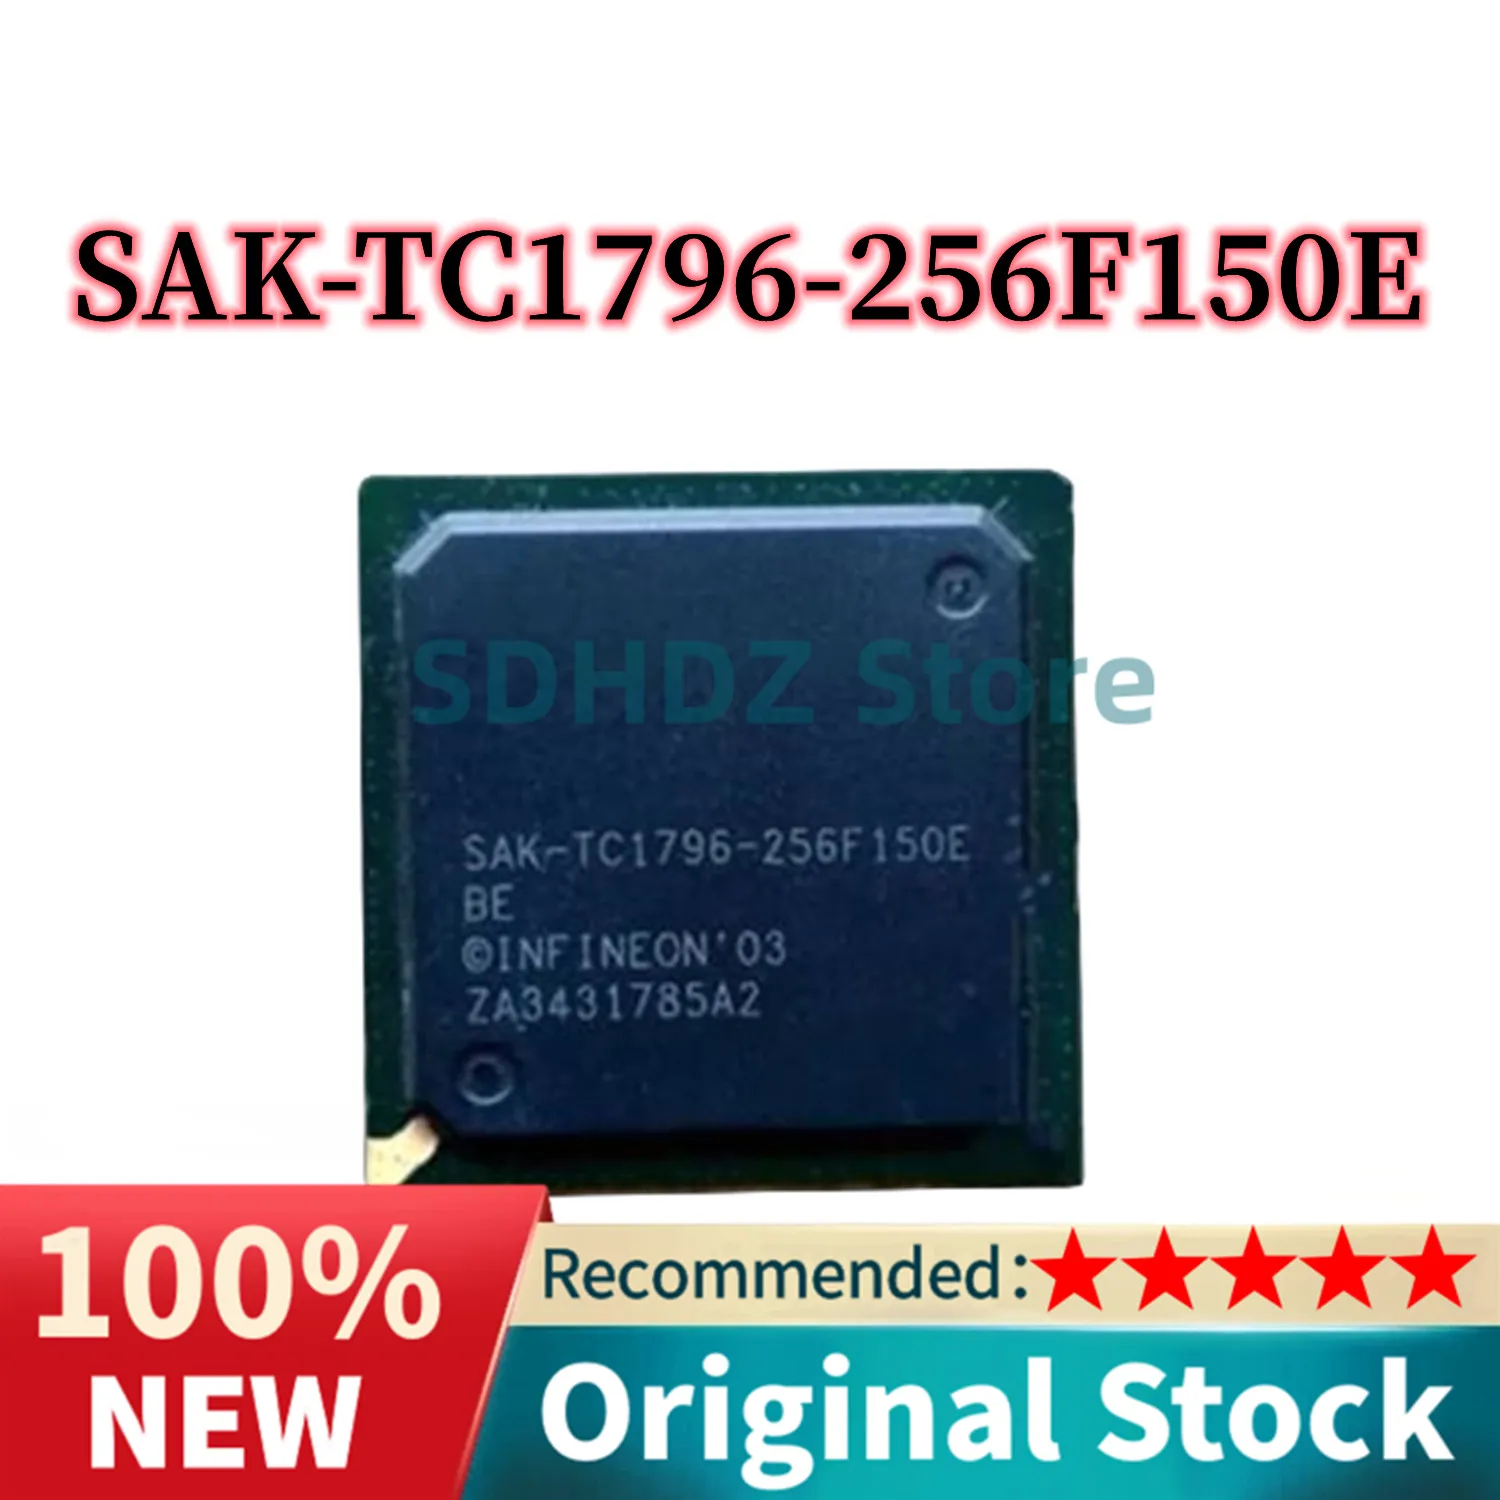 

SAK-TC1796-256F150E BE automotive computer boards commonly used vulnerable CPU SAK-TC1796-256F150EBE BGA